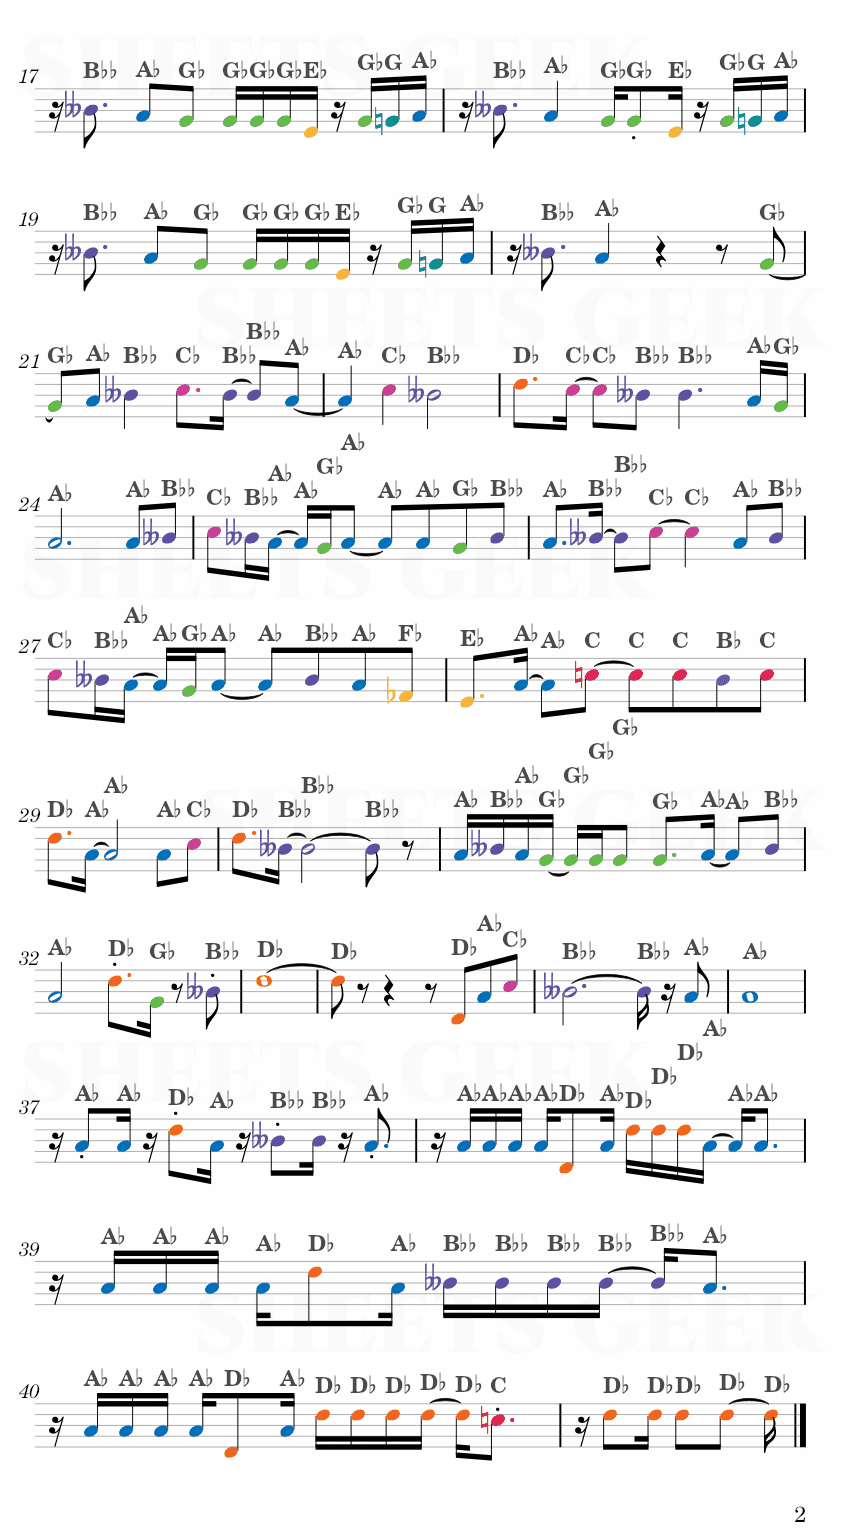 Kuusou Mesorogiwi - Mirai Nikki Opening Easy Sheet Music Free for piano, keyboard, flute, violin, sax, cello page 2